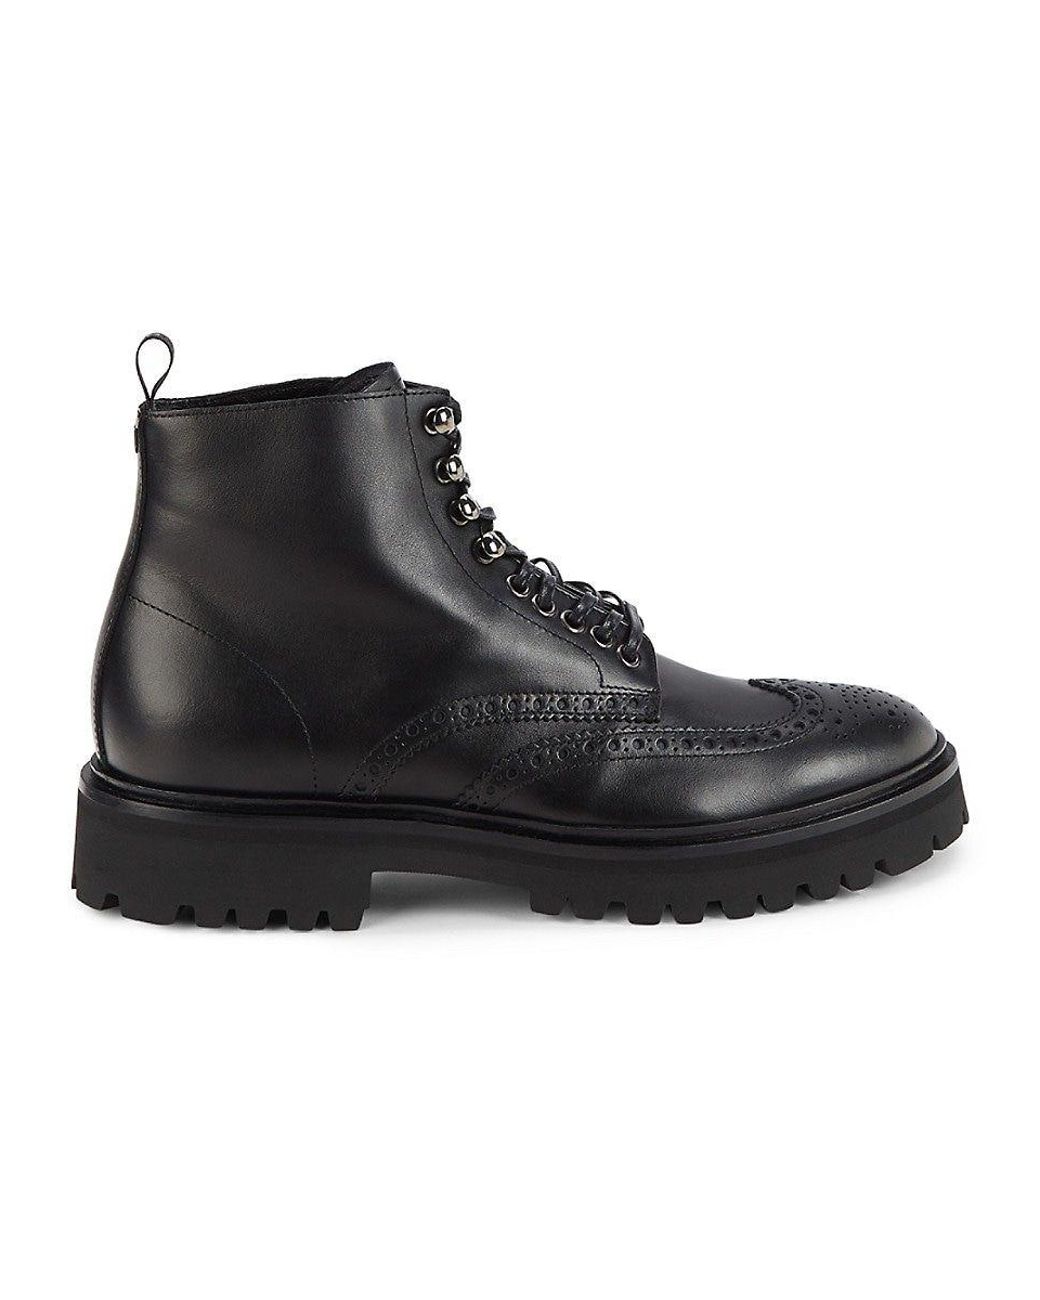 Emanuel Ungaro Leather Hiker Boots in Black | Lyst